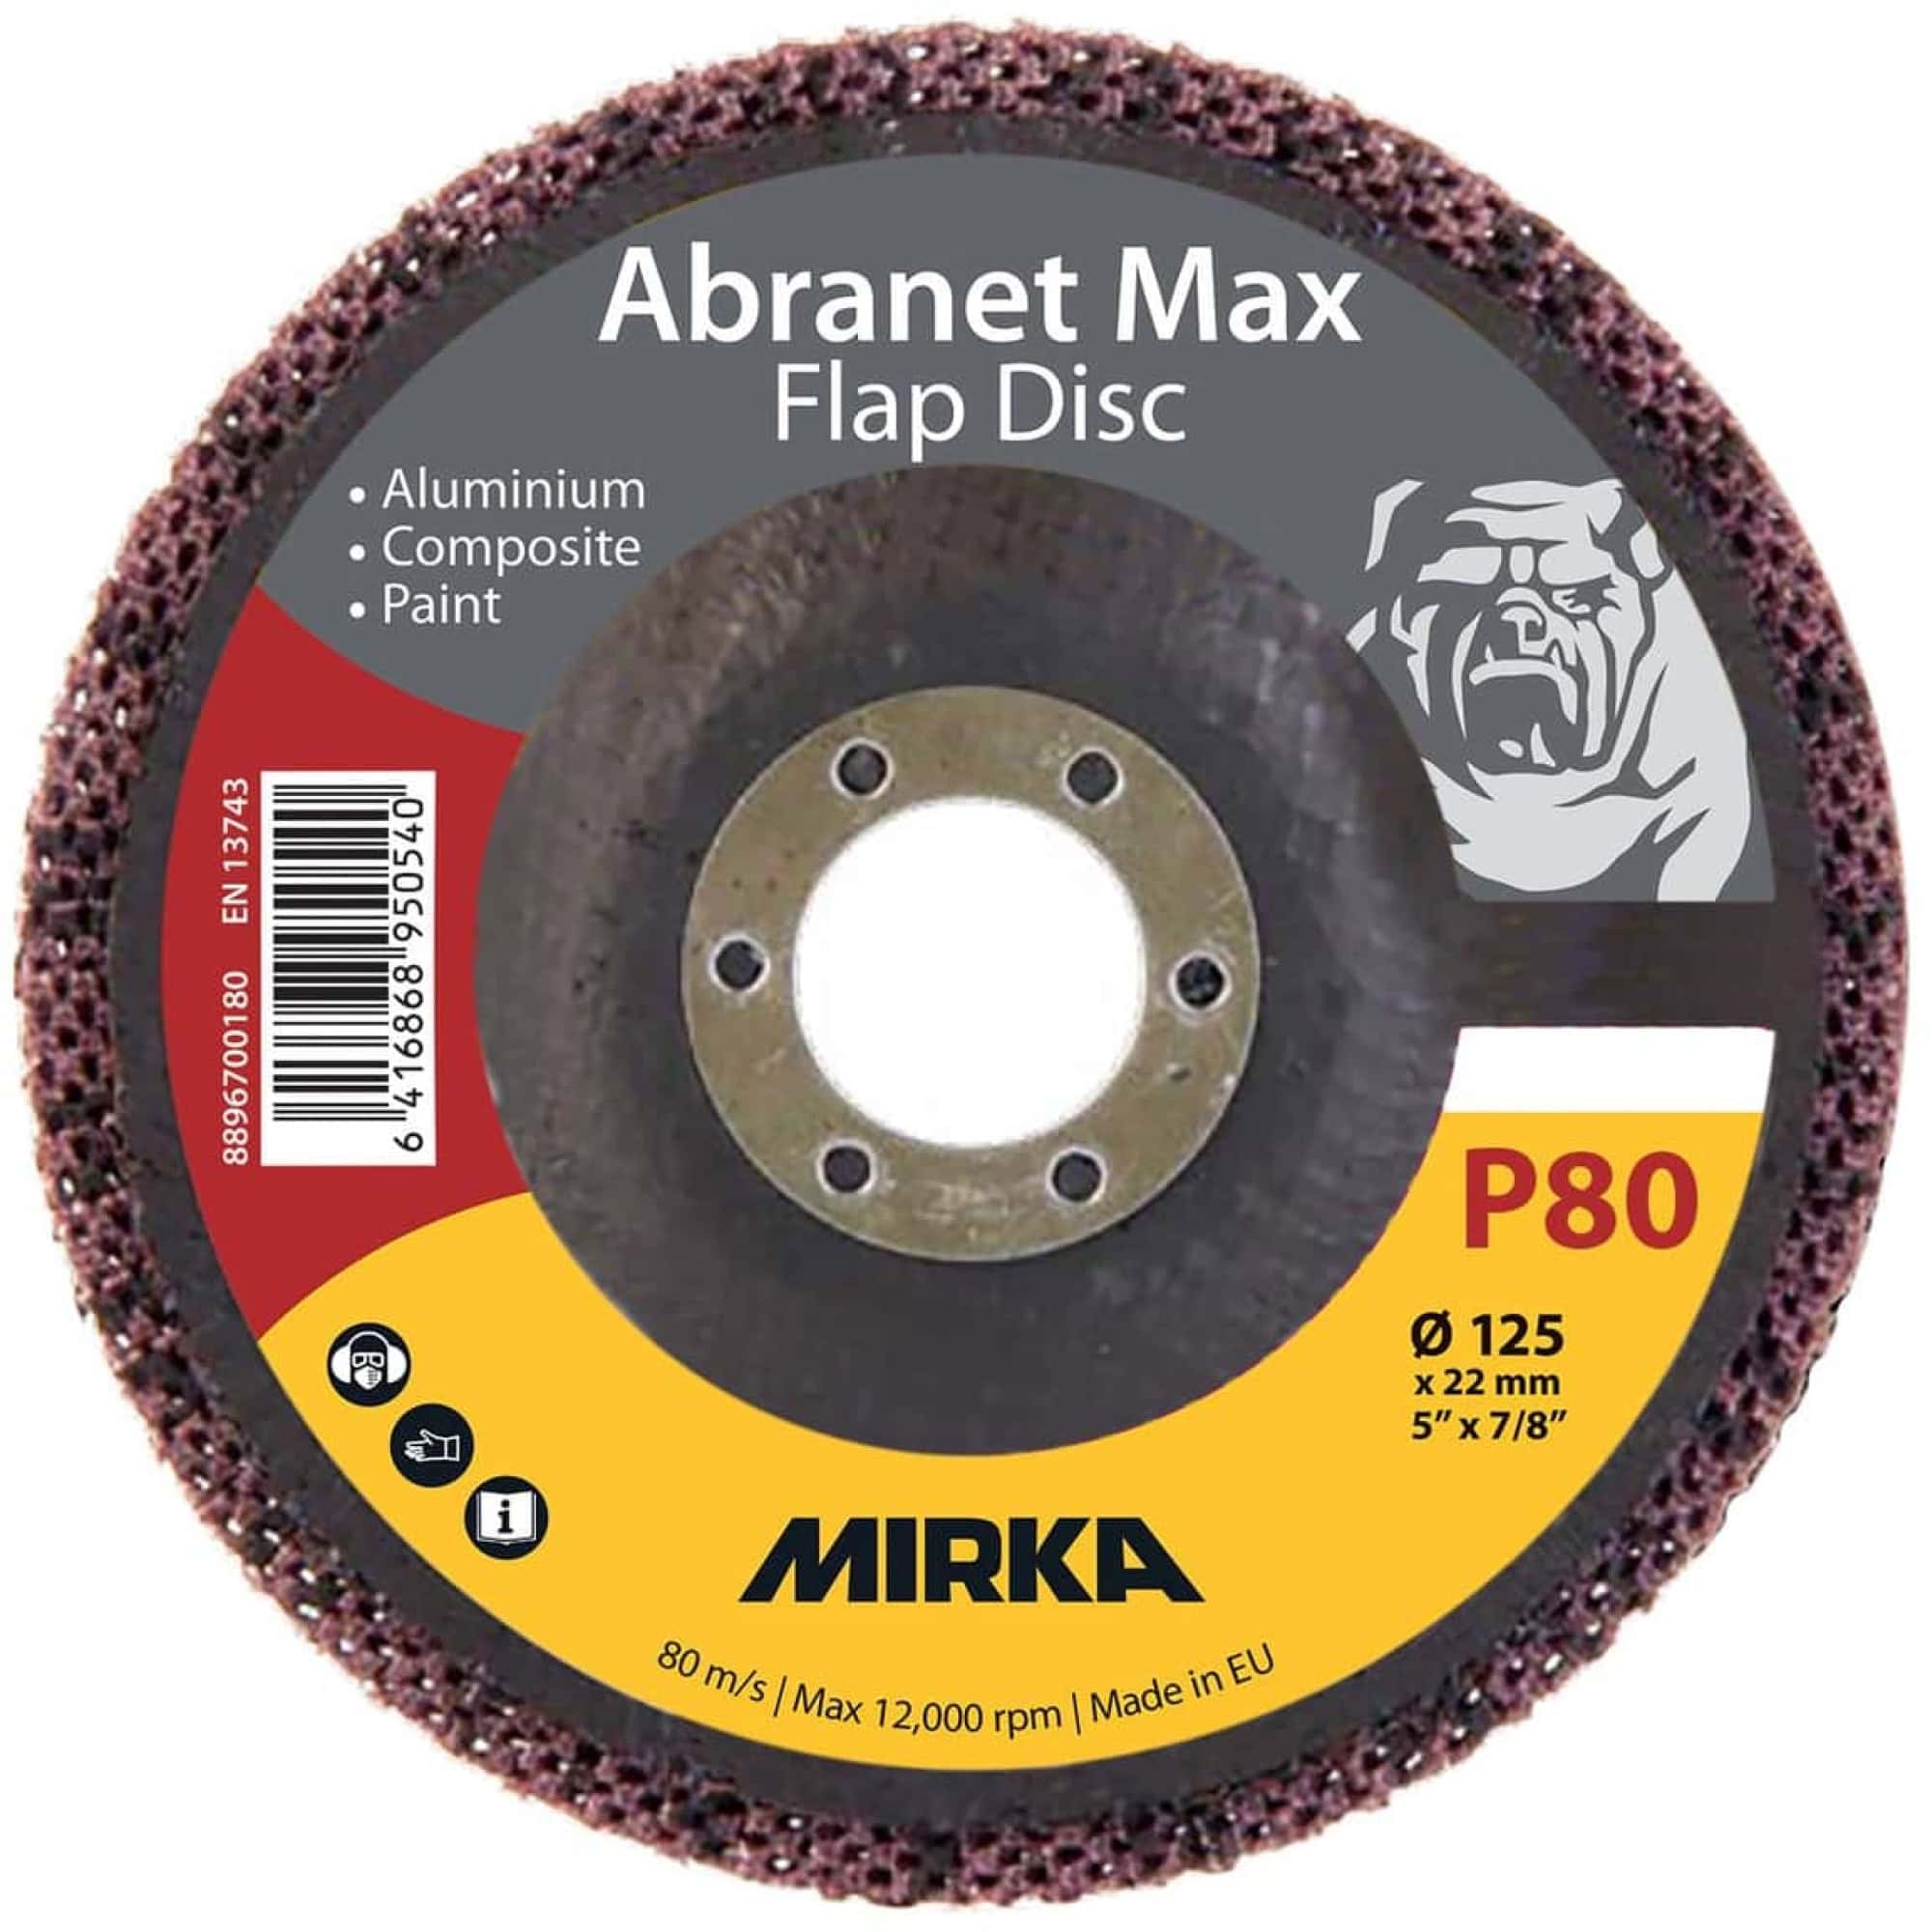 Mirka® Abranet® Max Flap Disc 8896700180, Ø 125 mm x 22 mm, P80, Fächerschleifscheibe mit Aluminiumoxidkorn